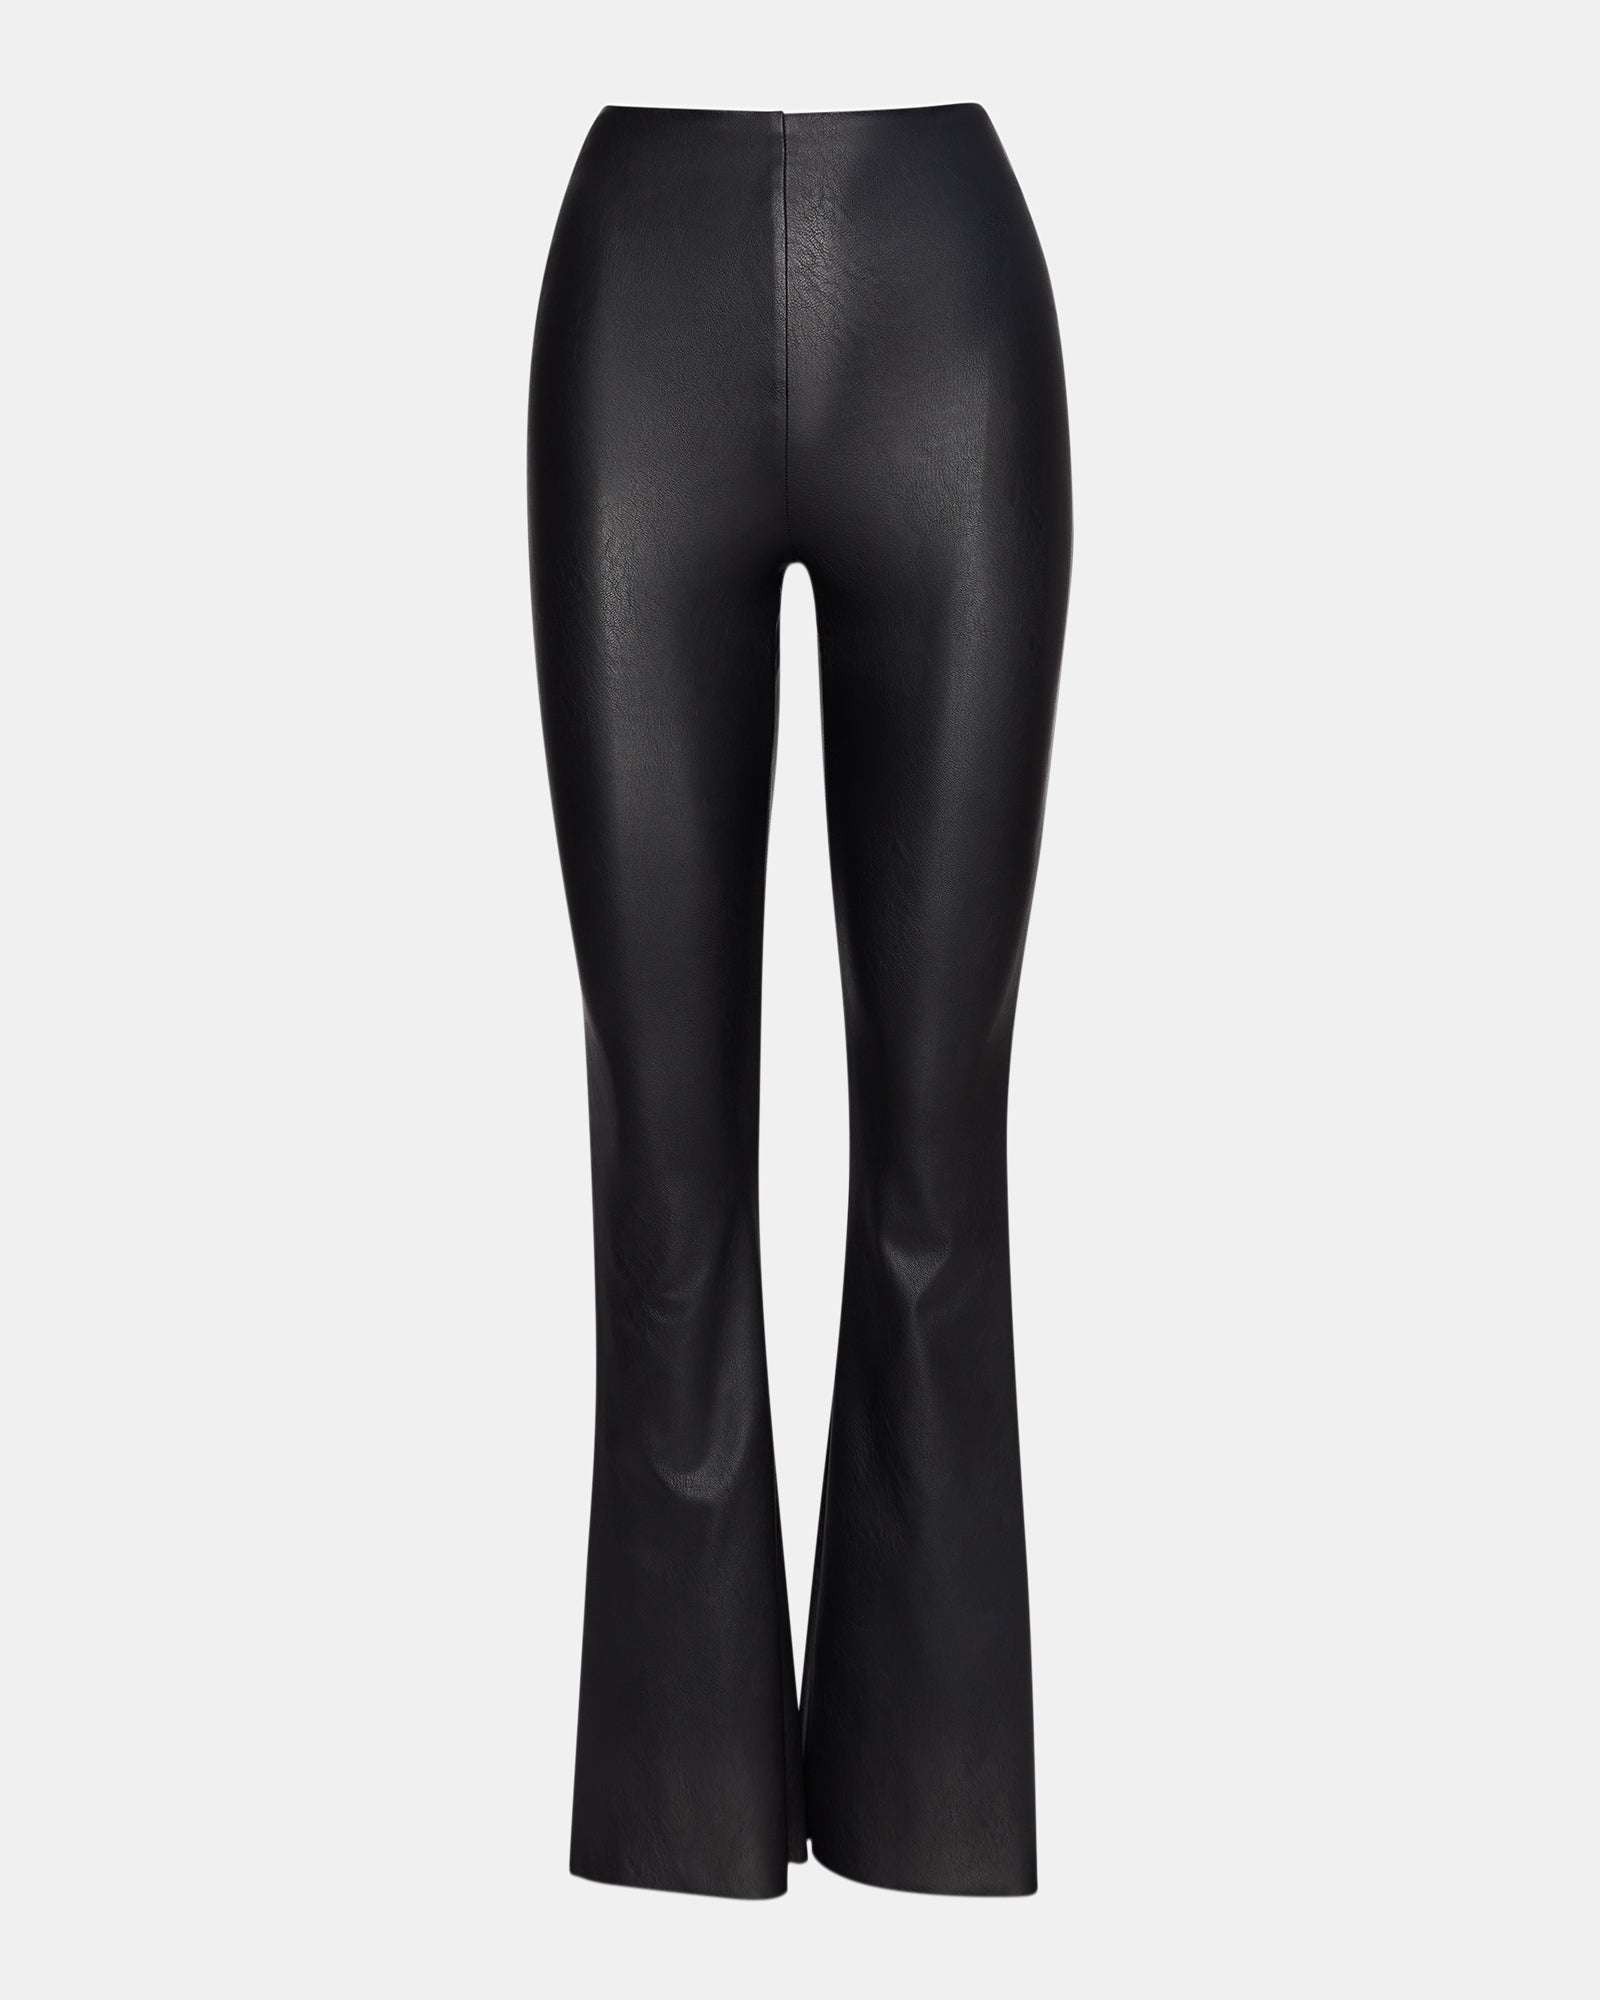 CITRINE Pant Black | Women's Faux Leather Flare Pants – Steve Madden